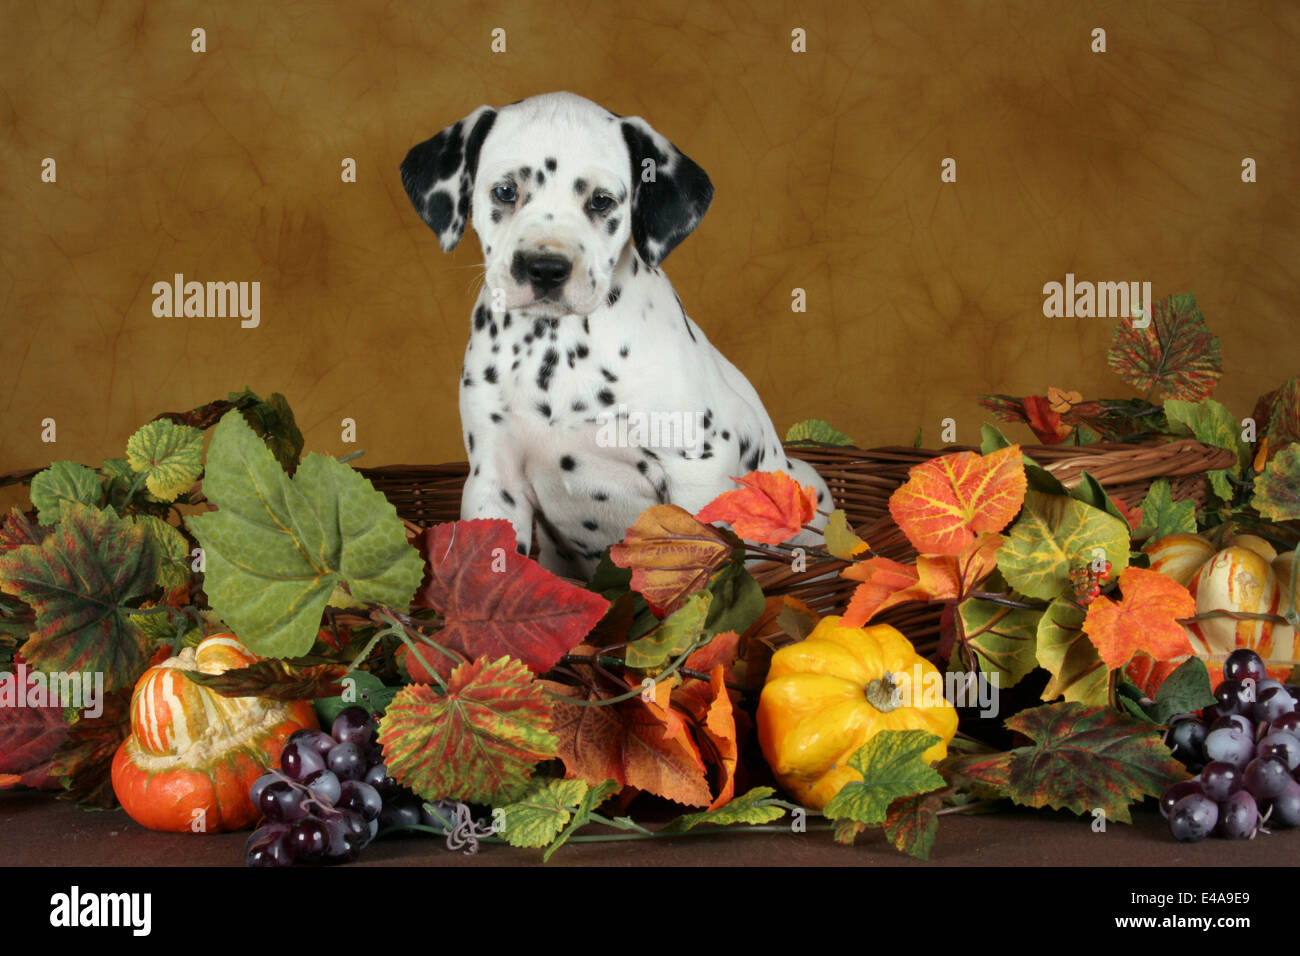 Dalmatian Puppy Stock Photo